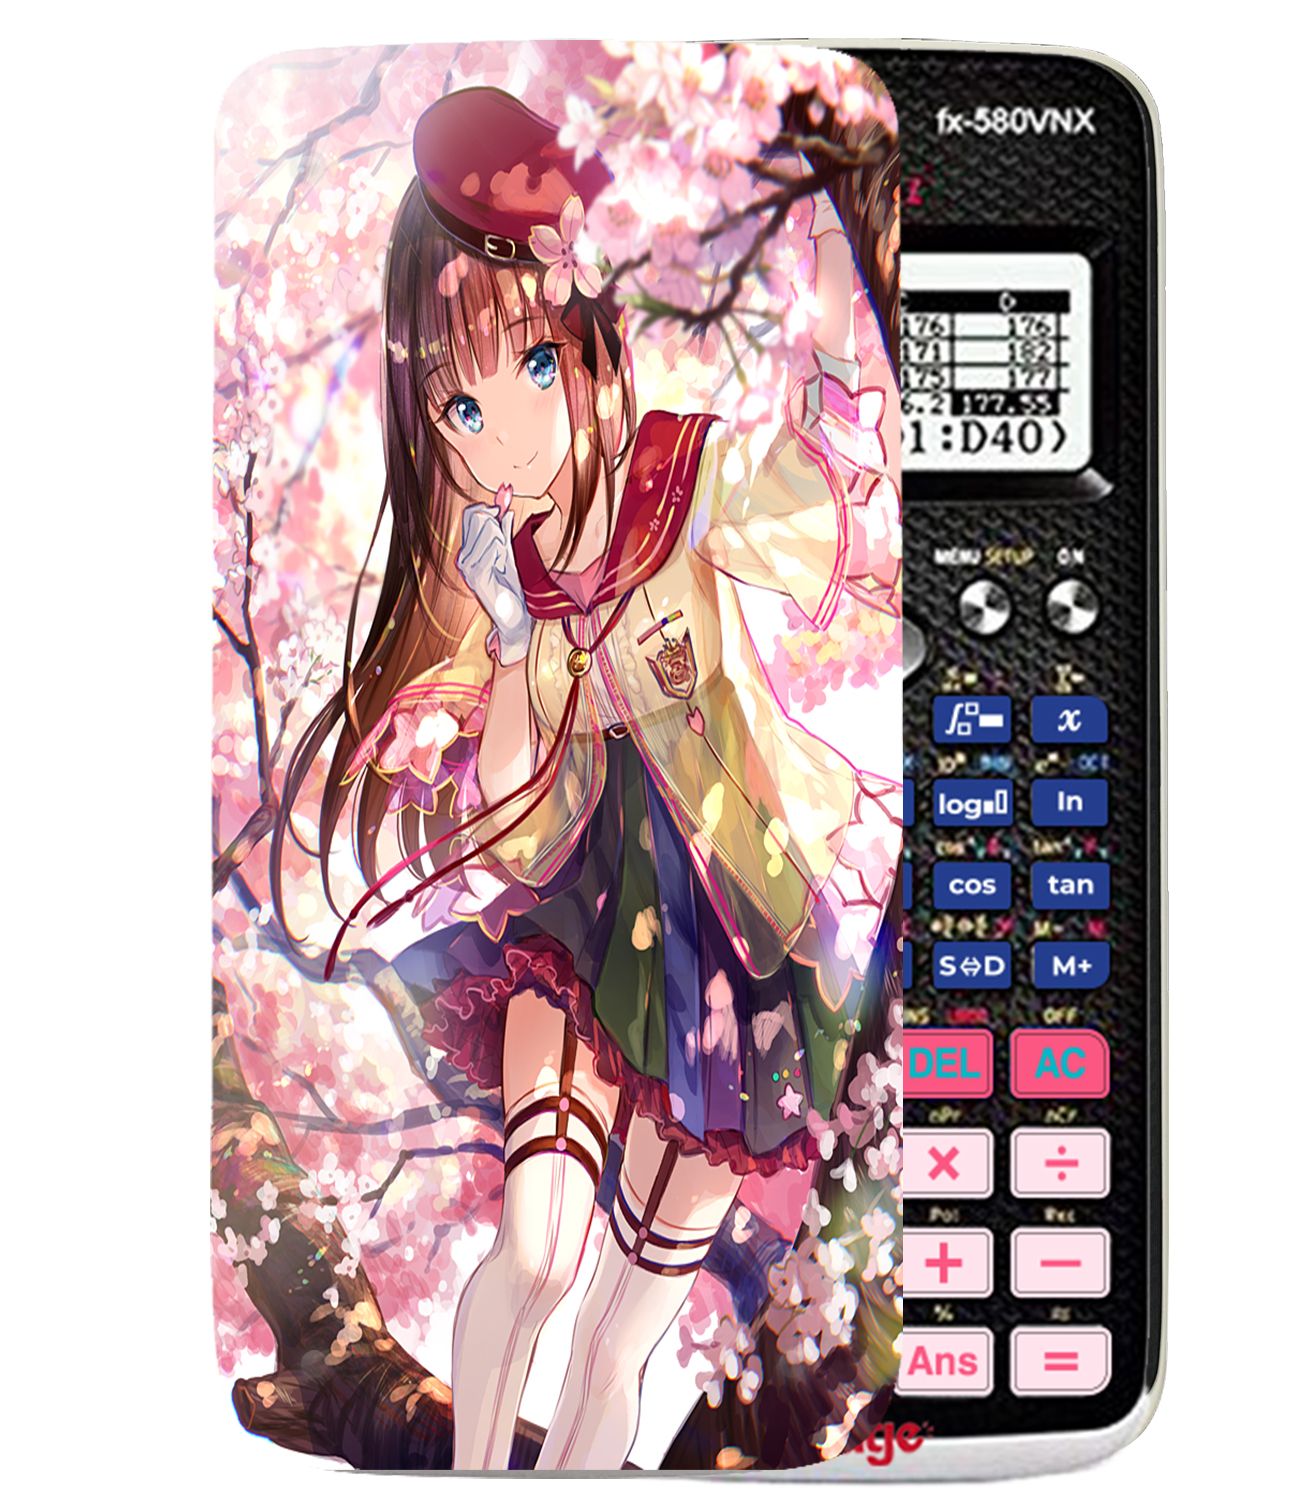 Ốp máy tính Casio FX 580 VNX Nhân vật Anime TAM 051